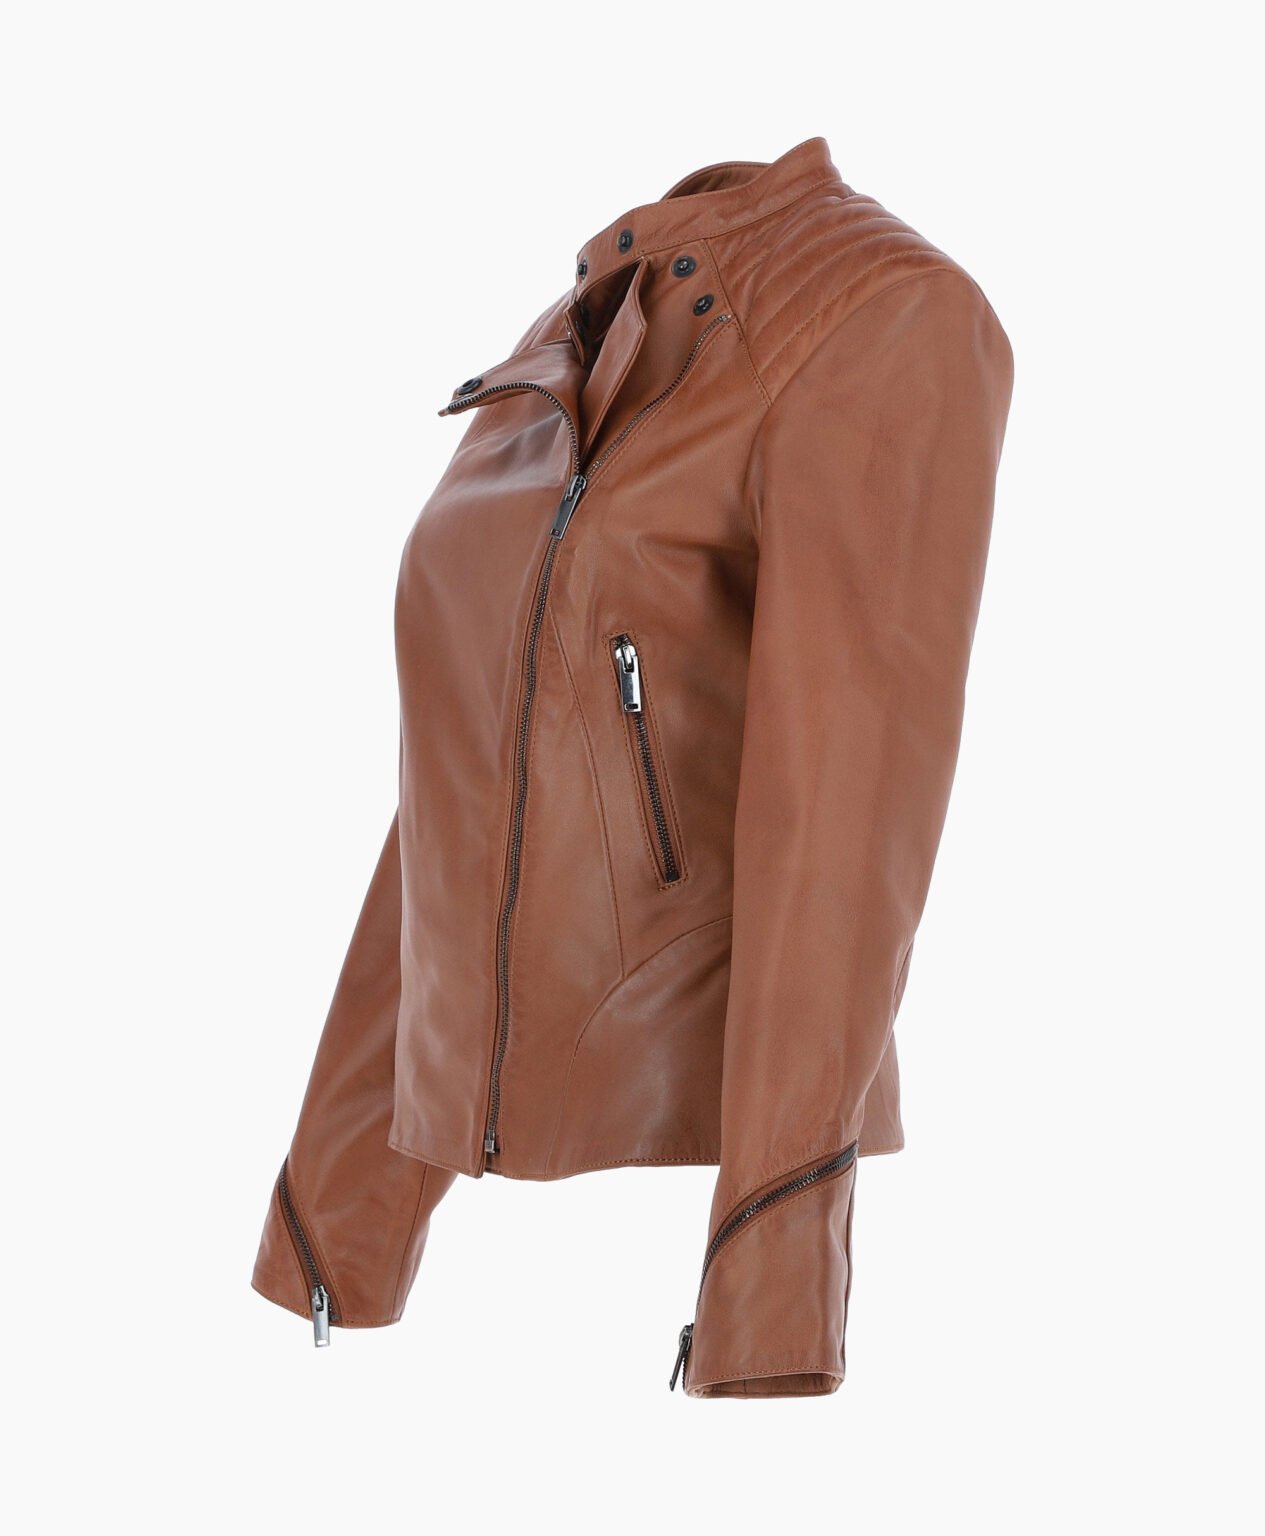 vogue-jacket-leather-biker-jacket-tan-mundelein-image201